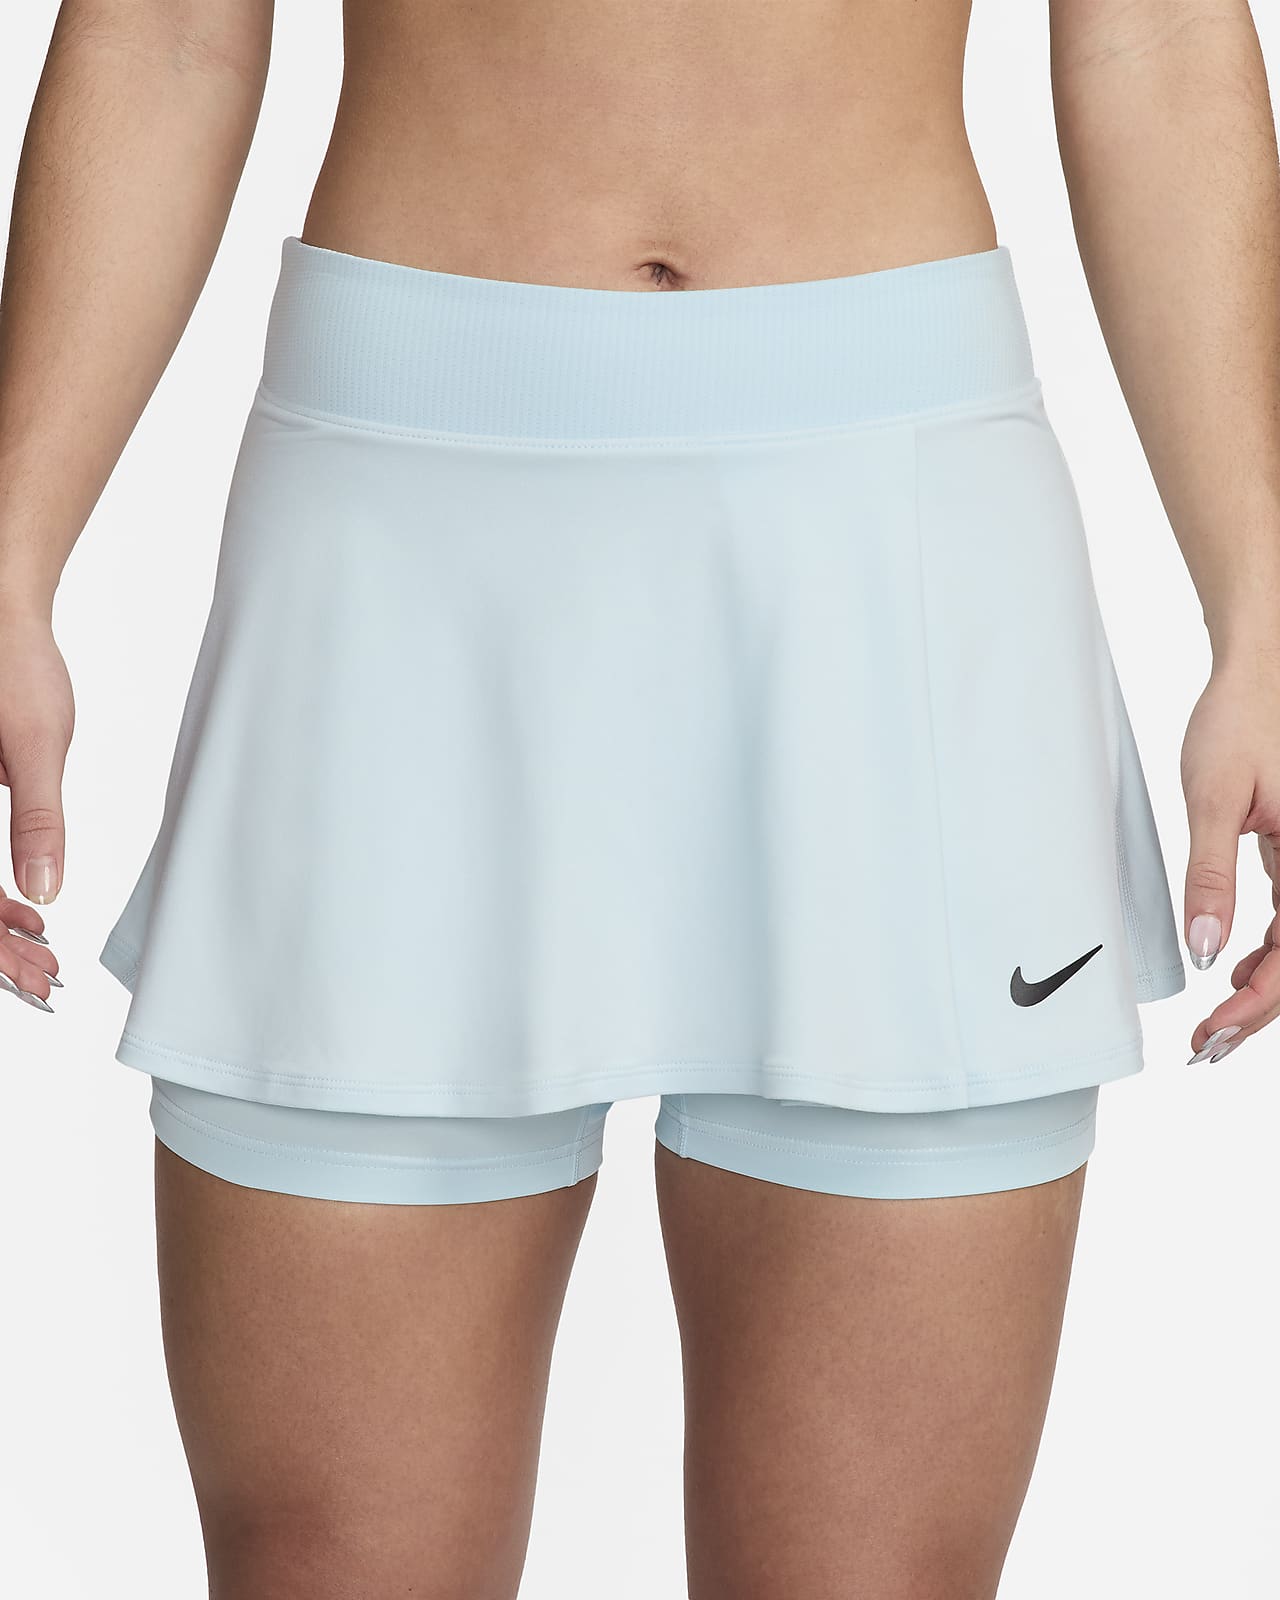 Flowy Skirts for Women Gym Athletic Shorts Workout Running Tennis Skater  Golf Cute Skort High Waisted